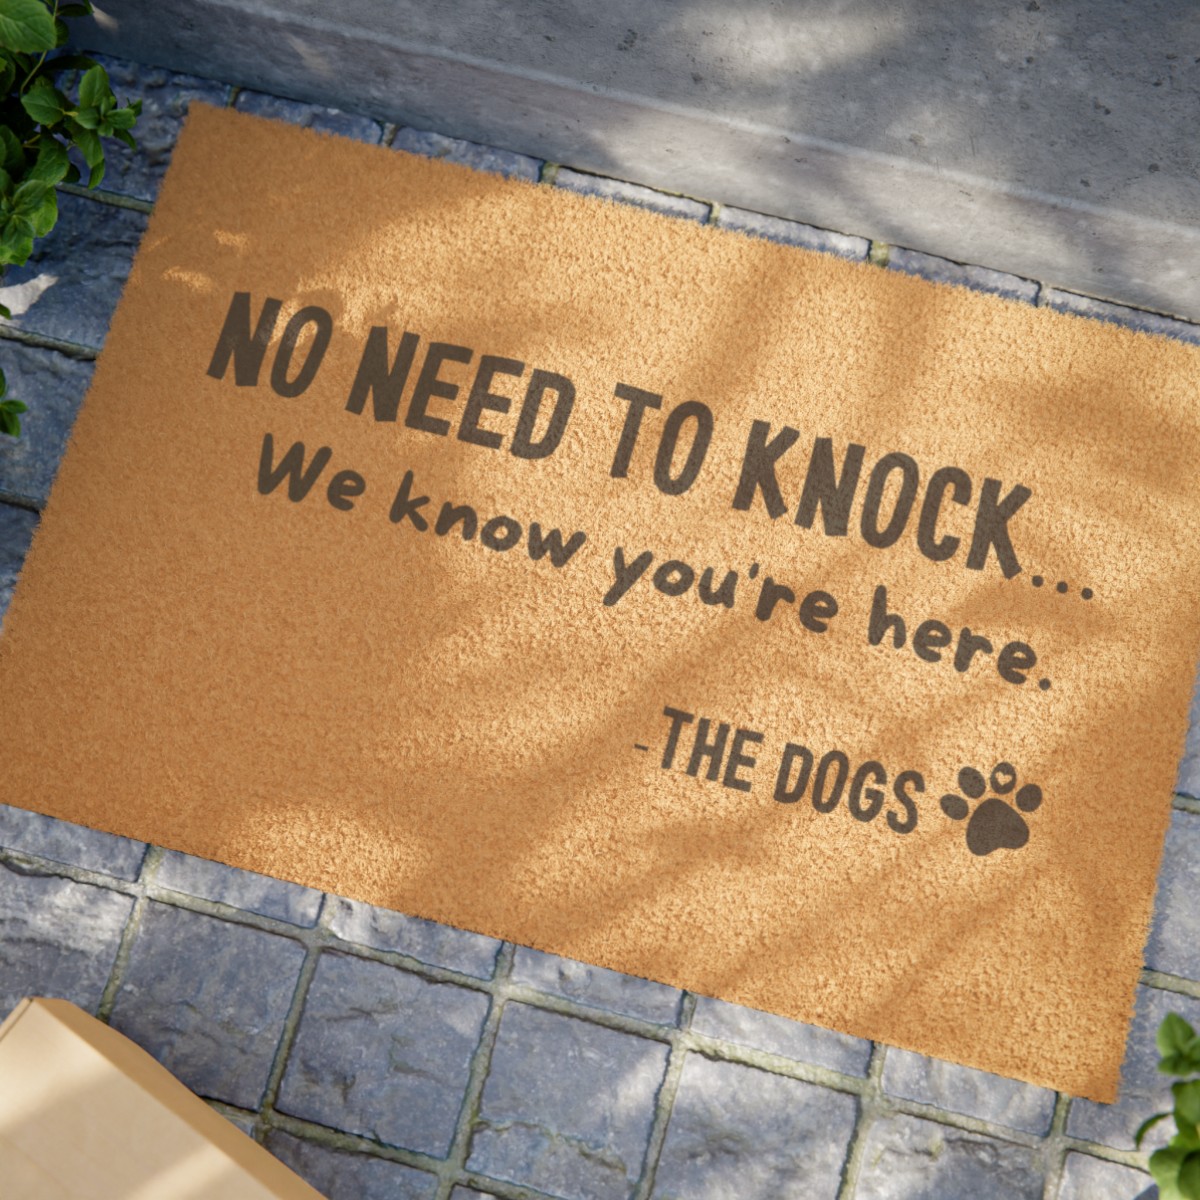 "no need to knock" doormat